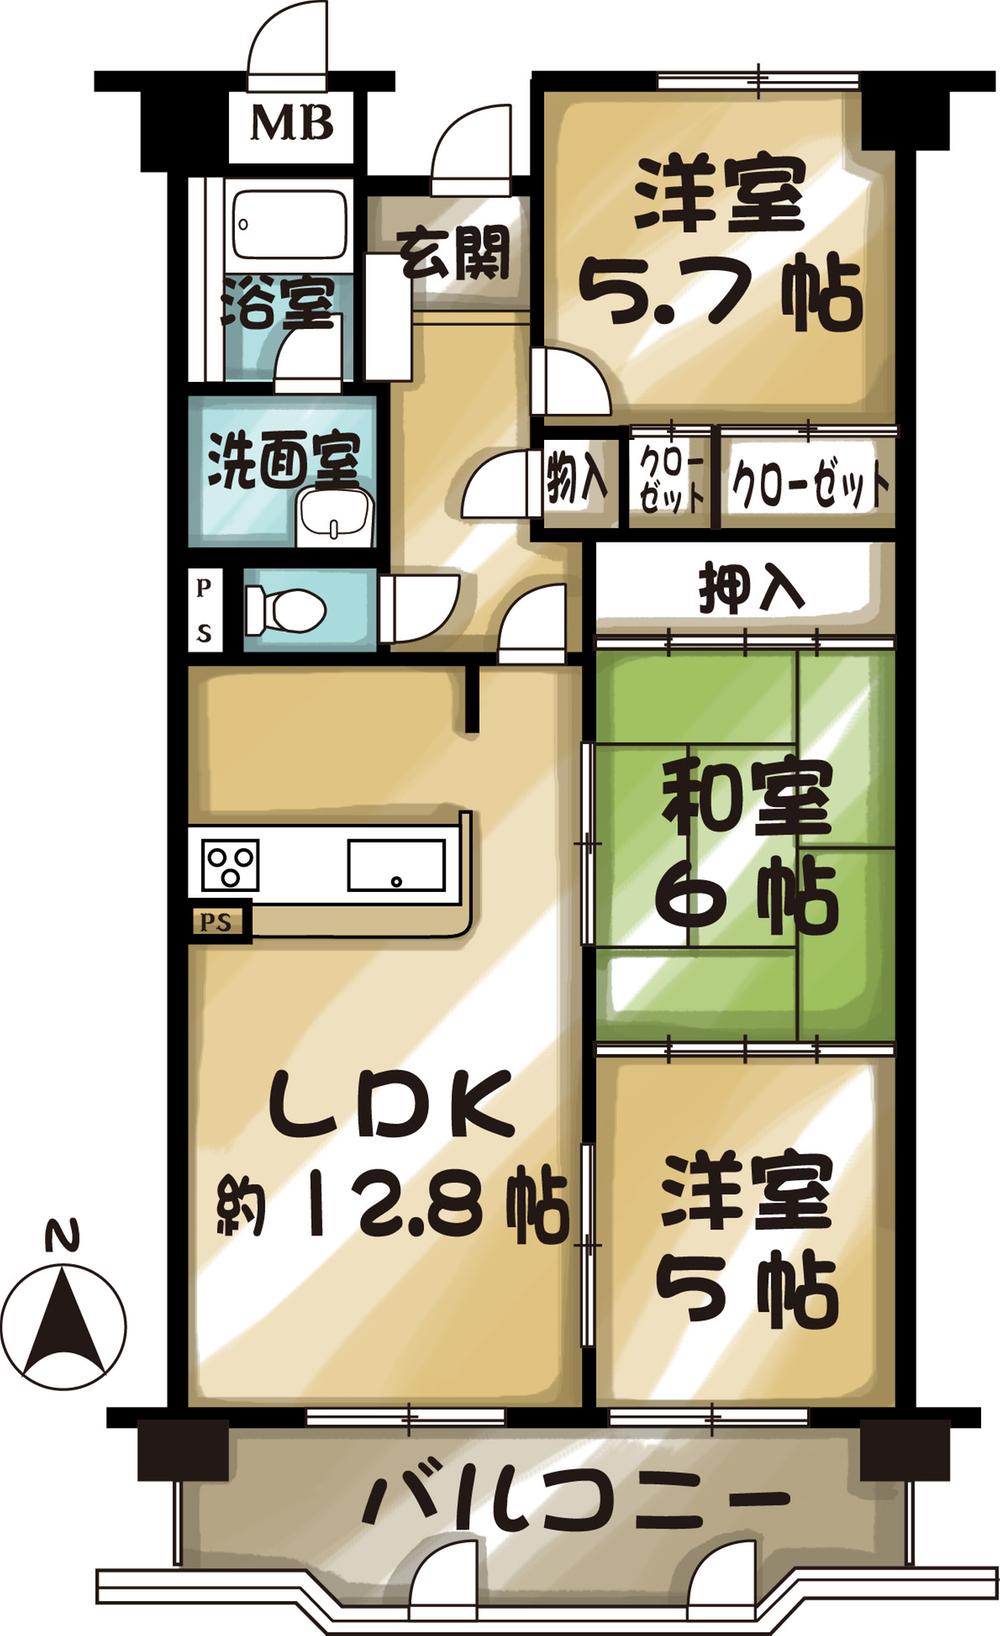 Floor plan. 3LDK, Price 12.8 million yen, Occupied area 64.36 sq m , Balcony area 10.17 sq m